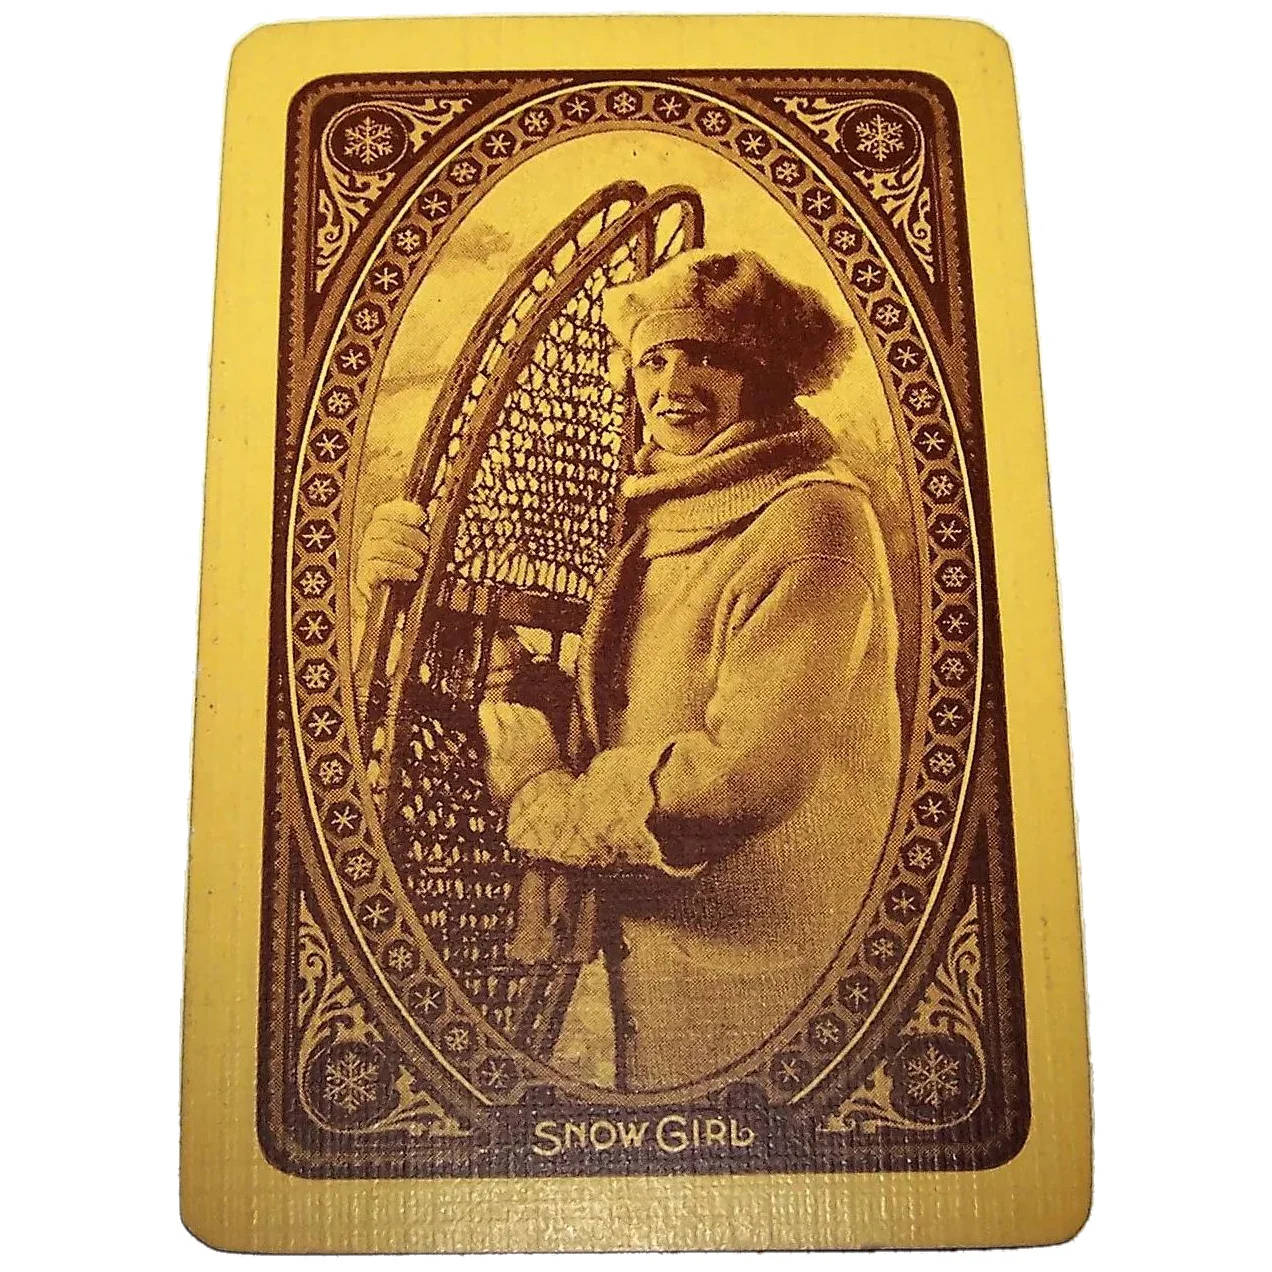 Vintage Snow Girl Playing Card Wallpaper